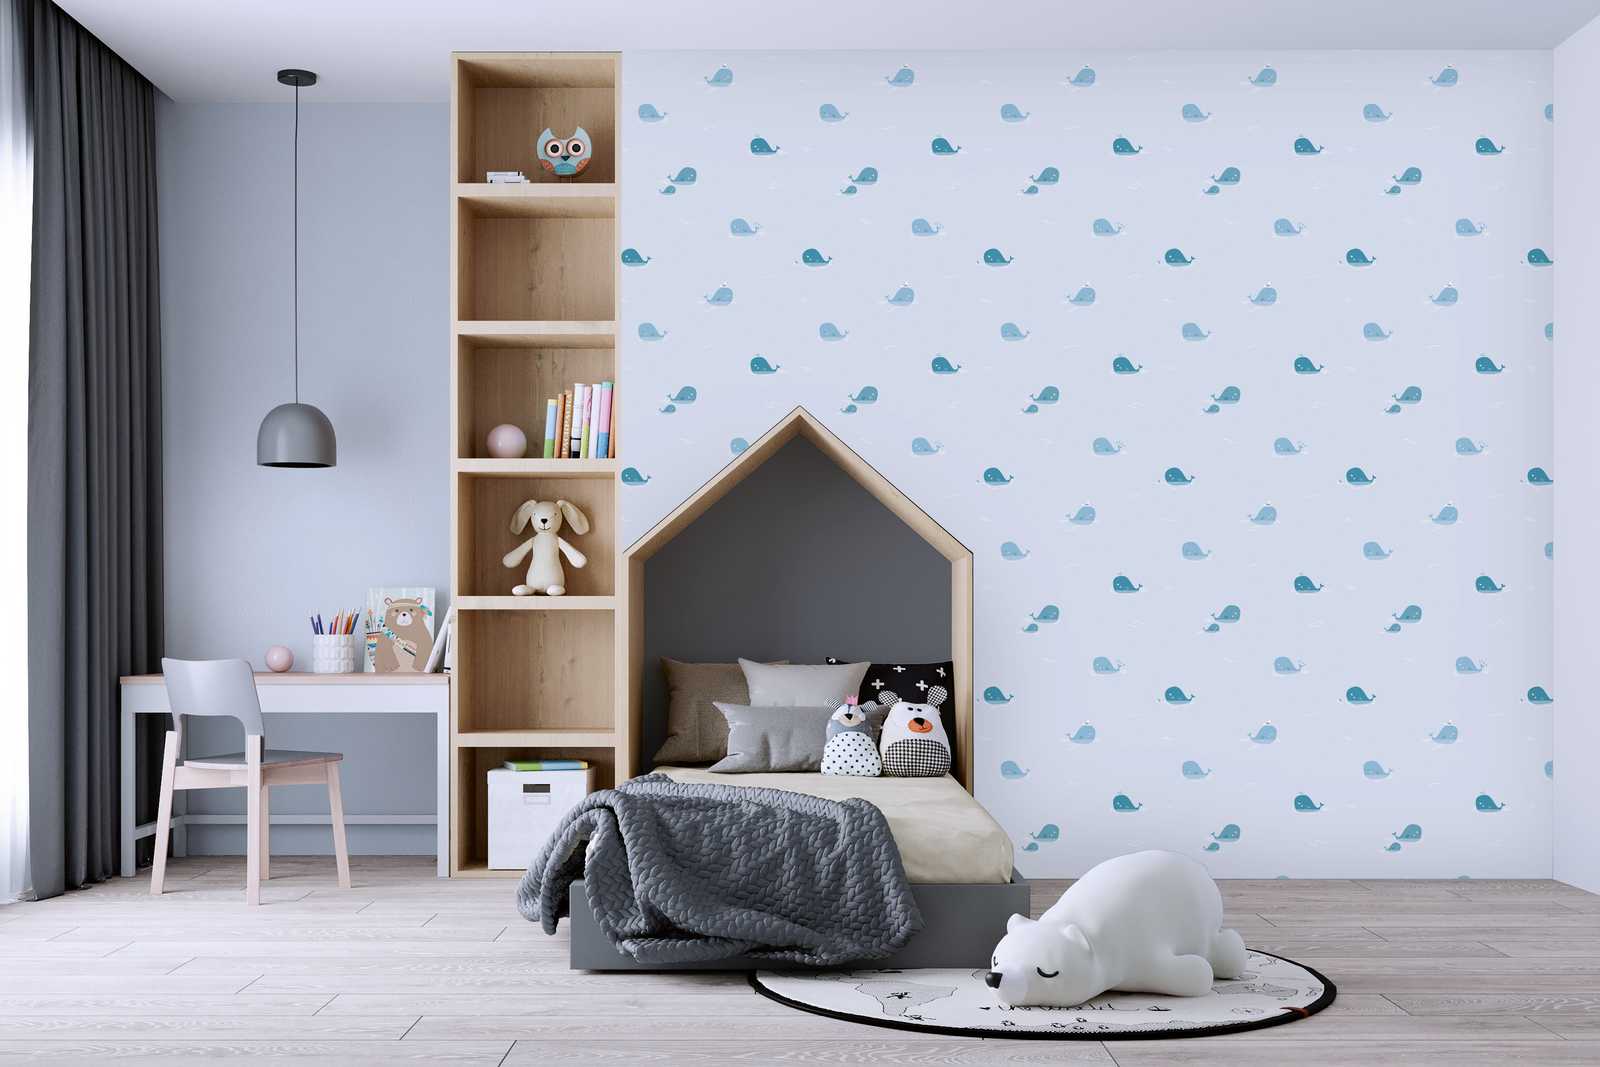             Nursery boys wallpaper whales - blue, grey, white
        